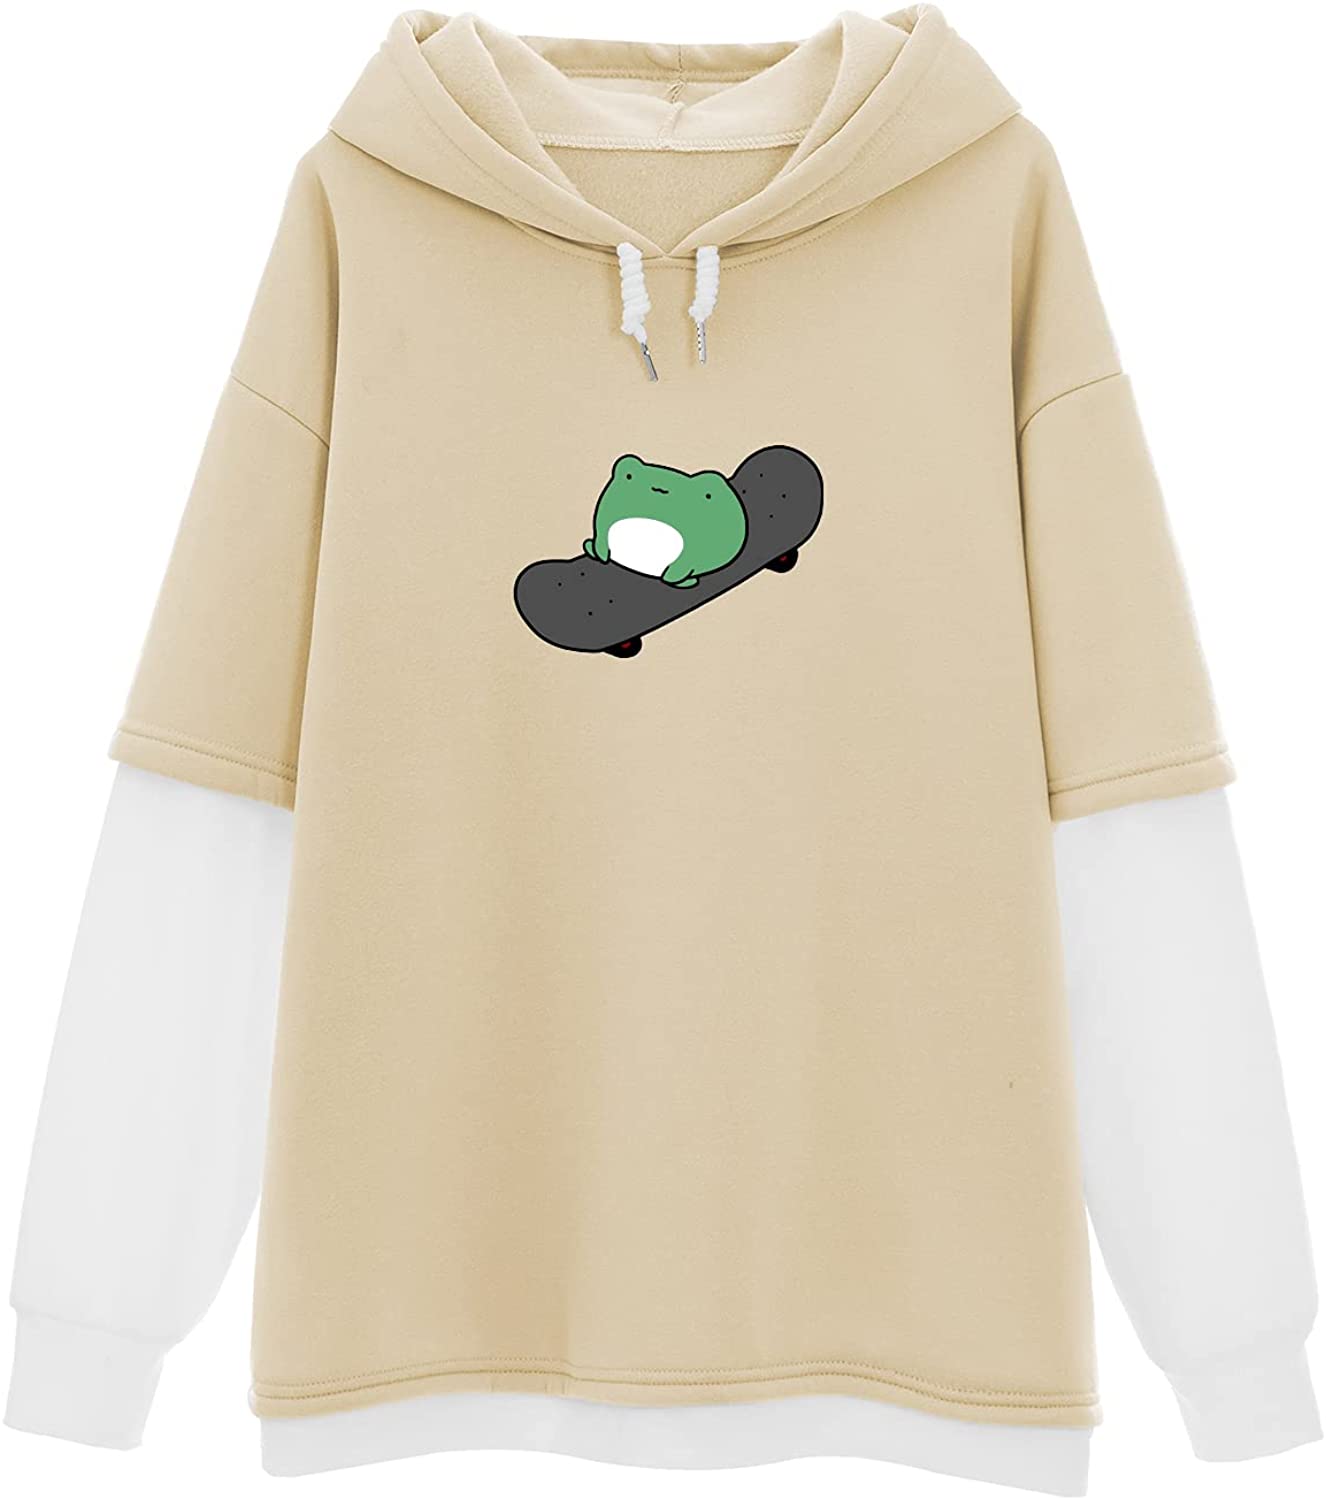 Hoodies for Women,Sweatshirts Teen Girls Casual Long Sleeve Skateboard Frog Print Pullover Jumper Hooded Tops 